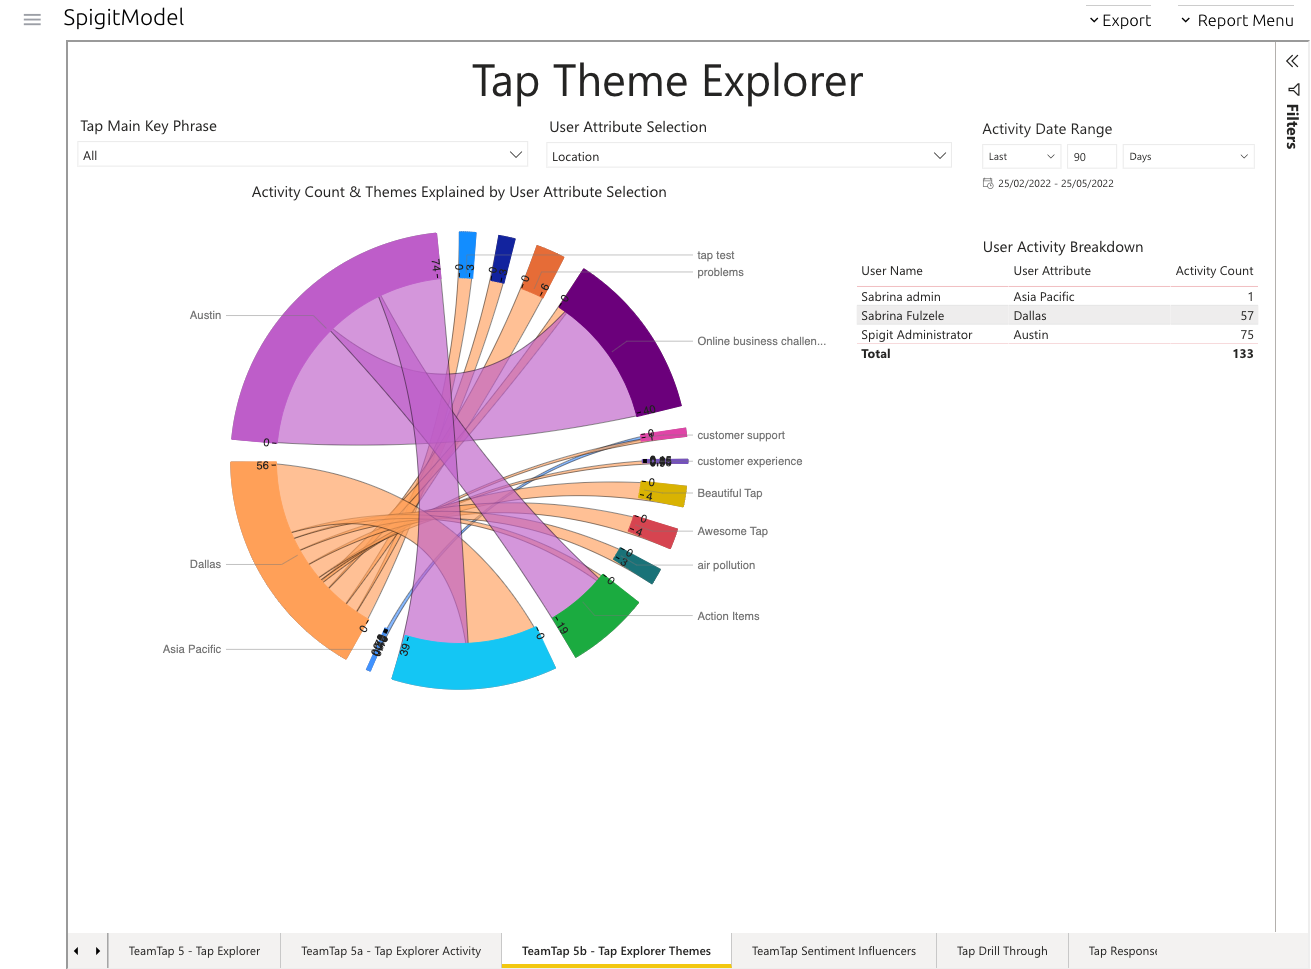 TeamTap 5b - Tap Explorer Themes.png